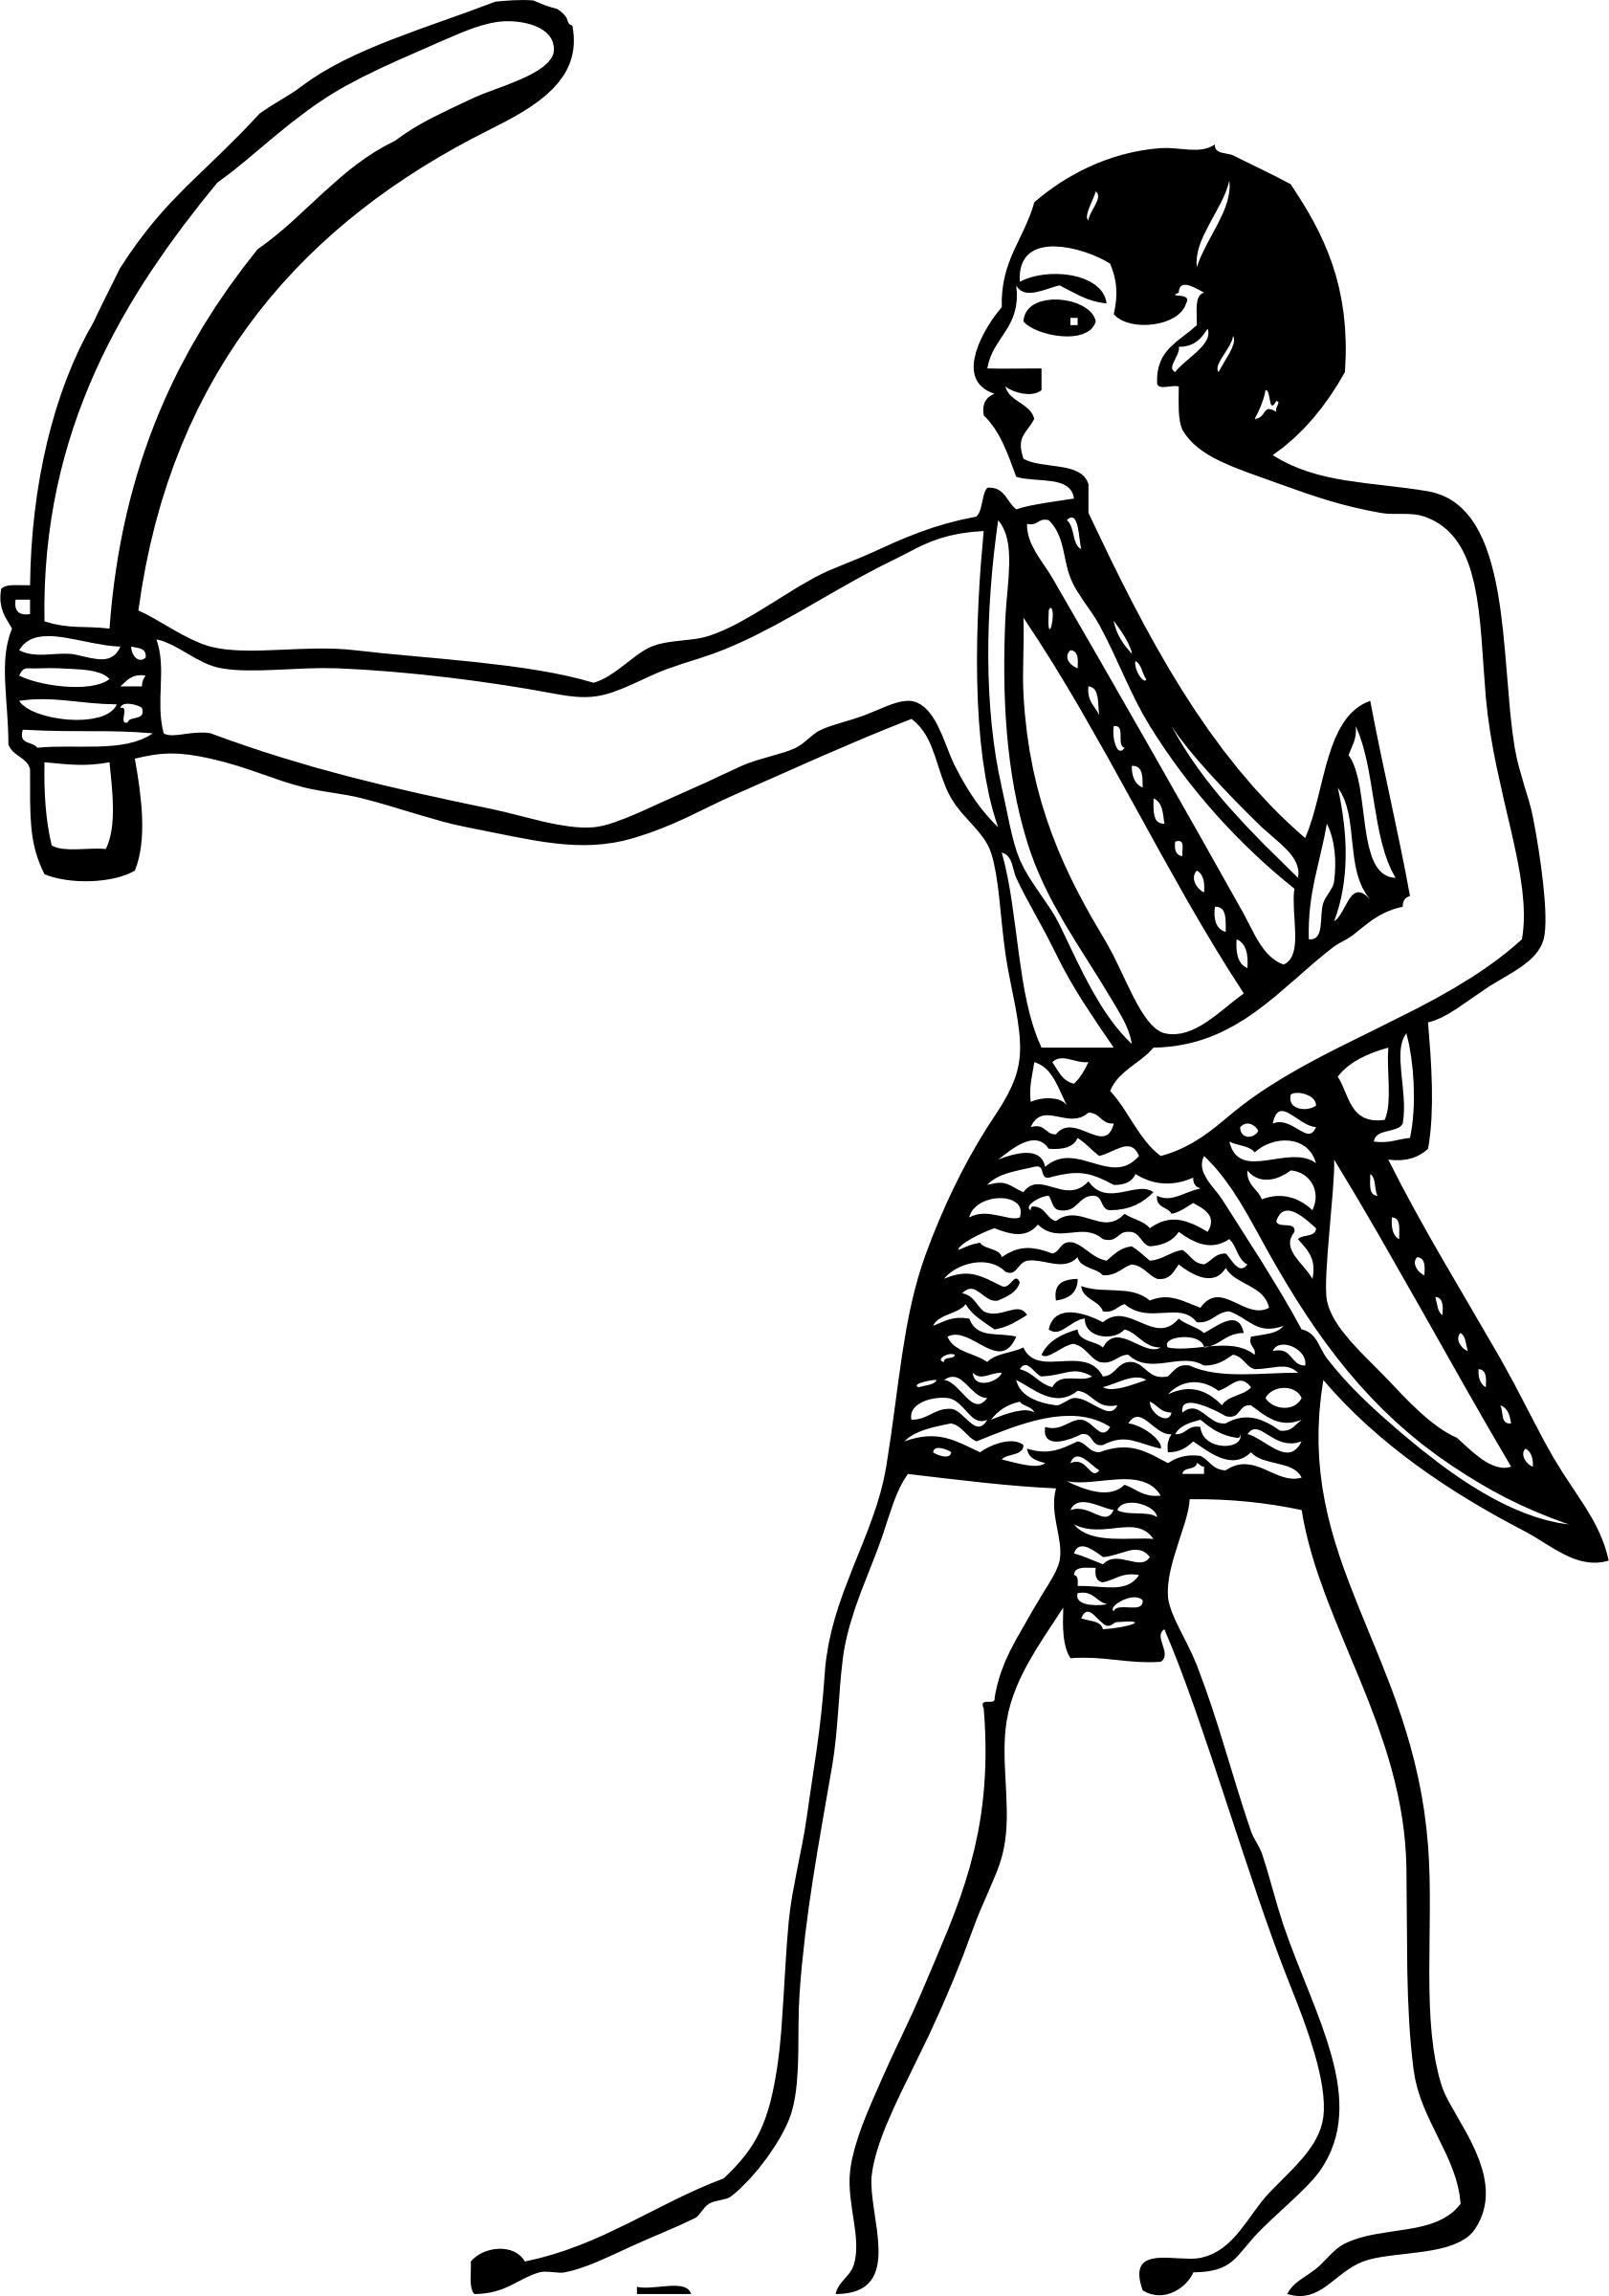 Egyptian boomerang png